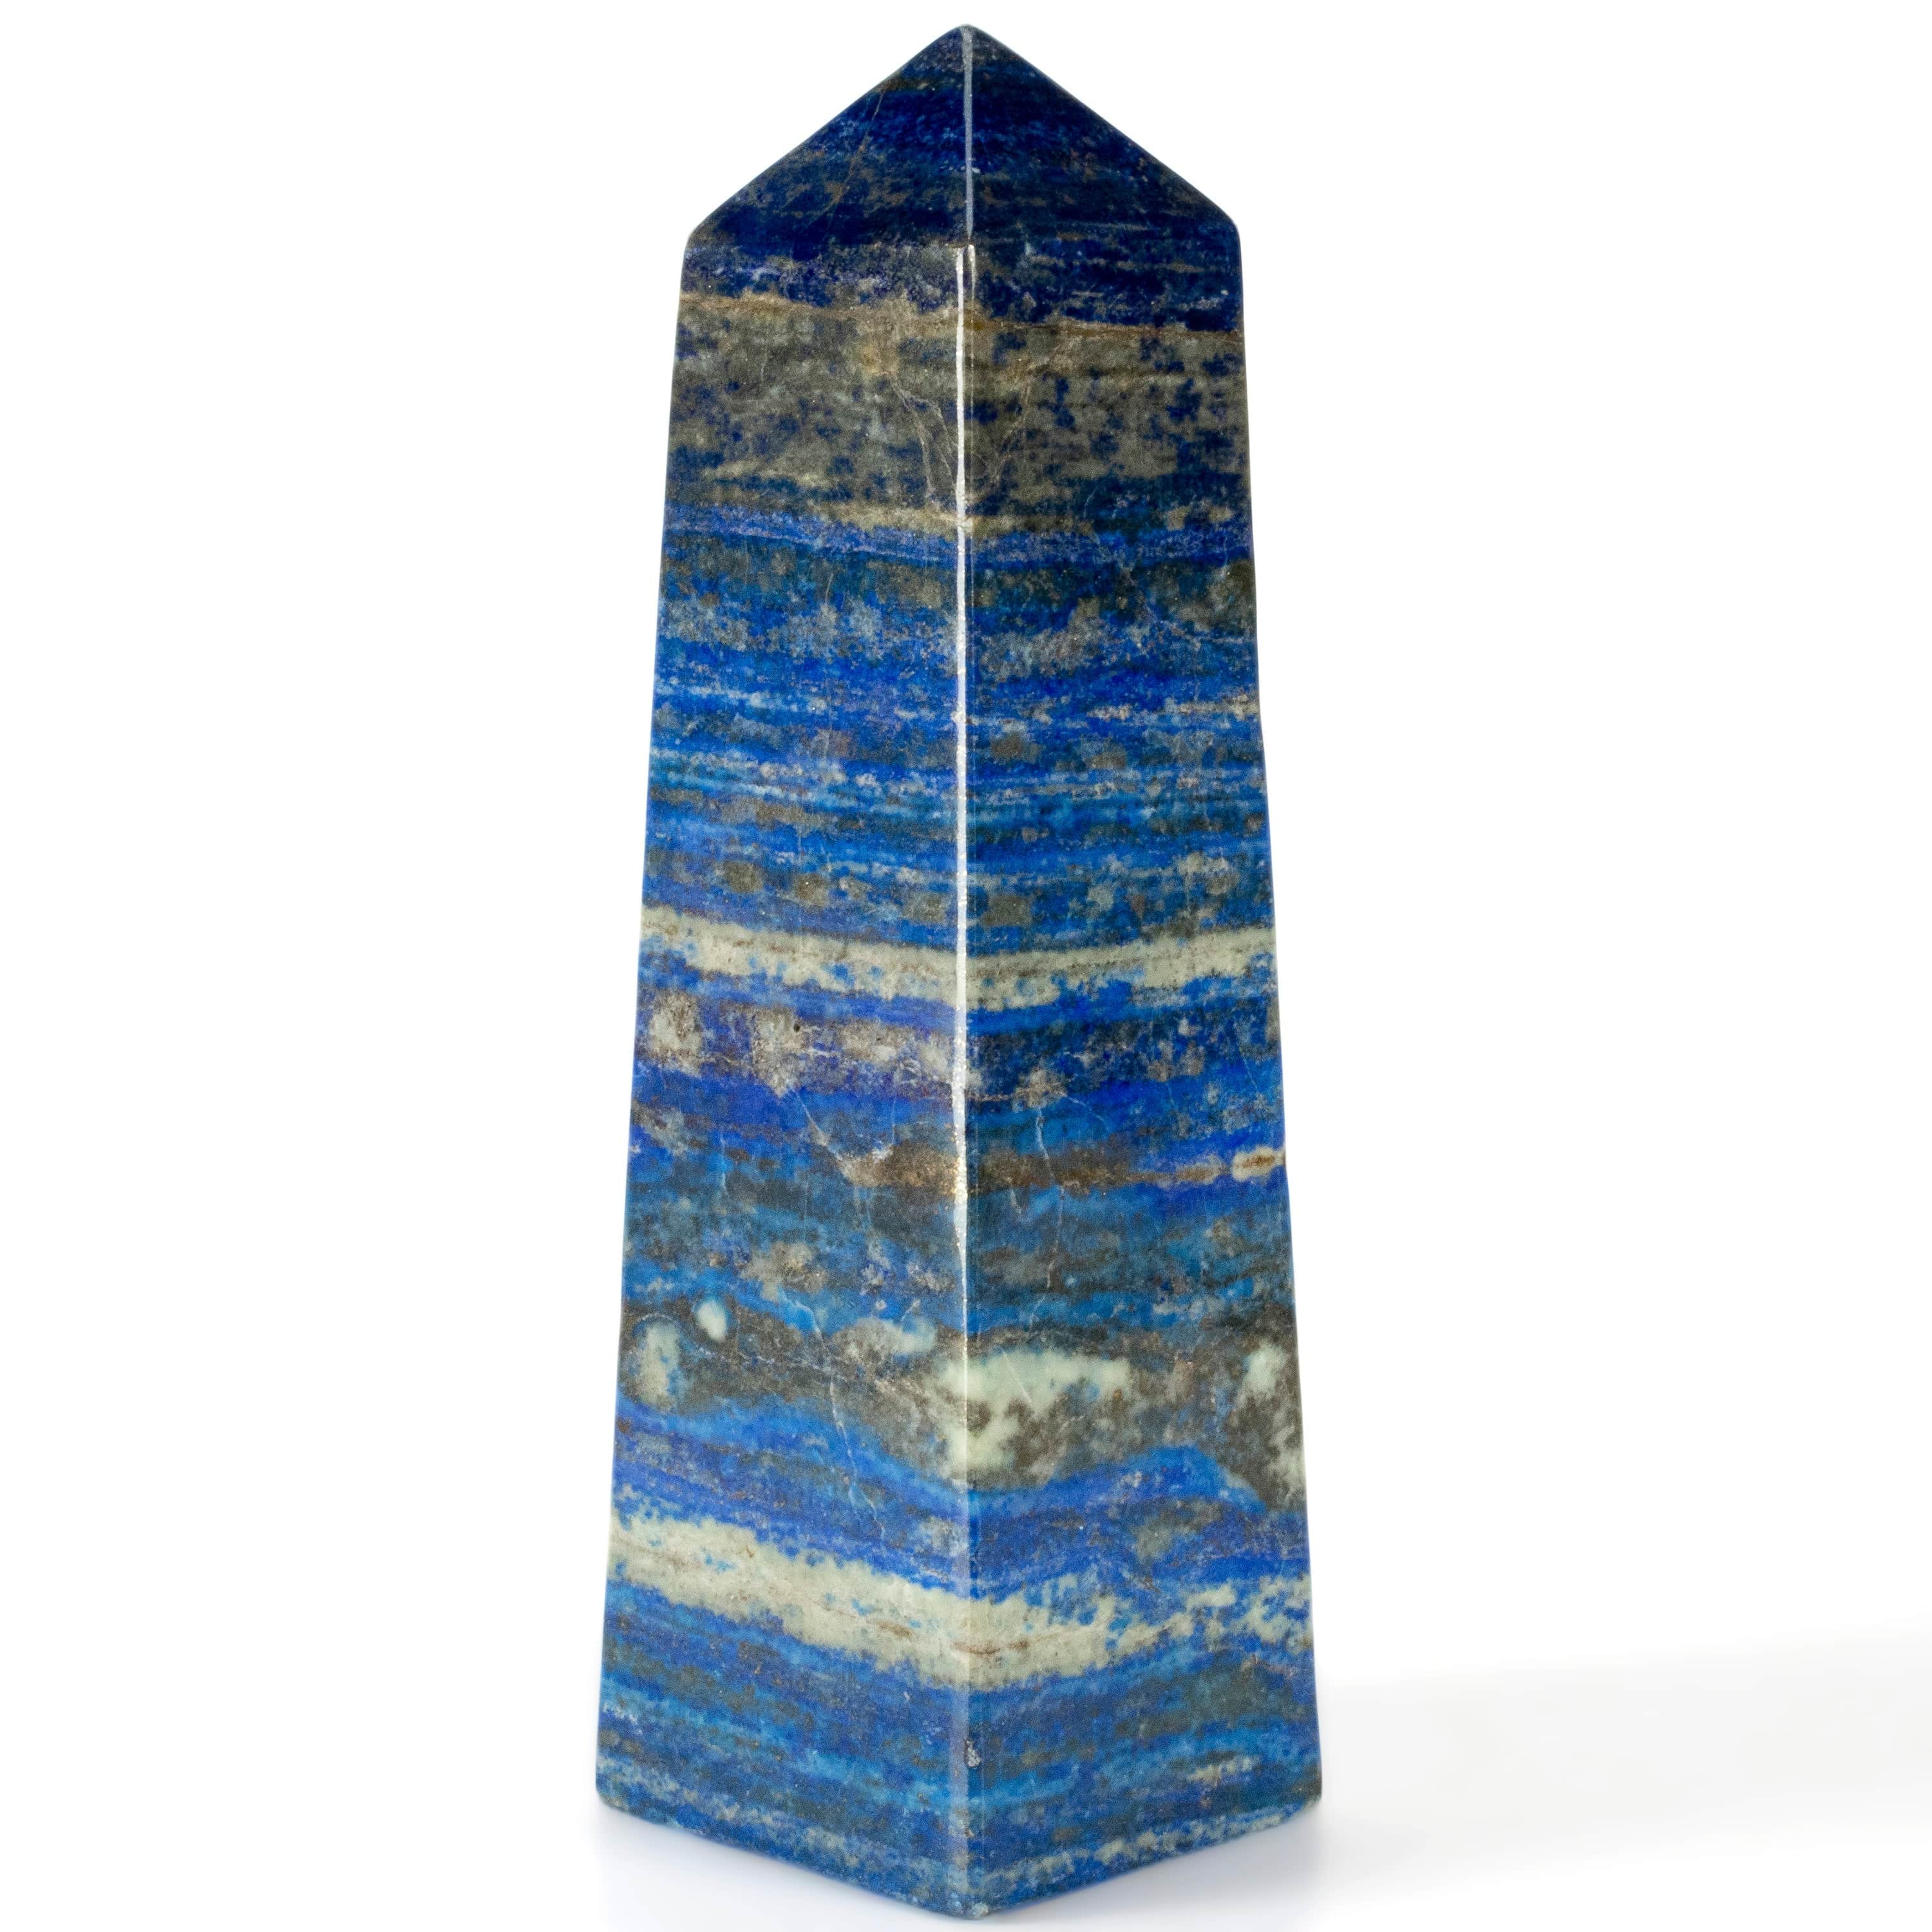 Kalifano Lapis Lapis Lazuli Polished Obelisk from Afghanistan - 11" / 7 lbs LPOB6800.001